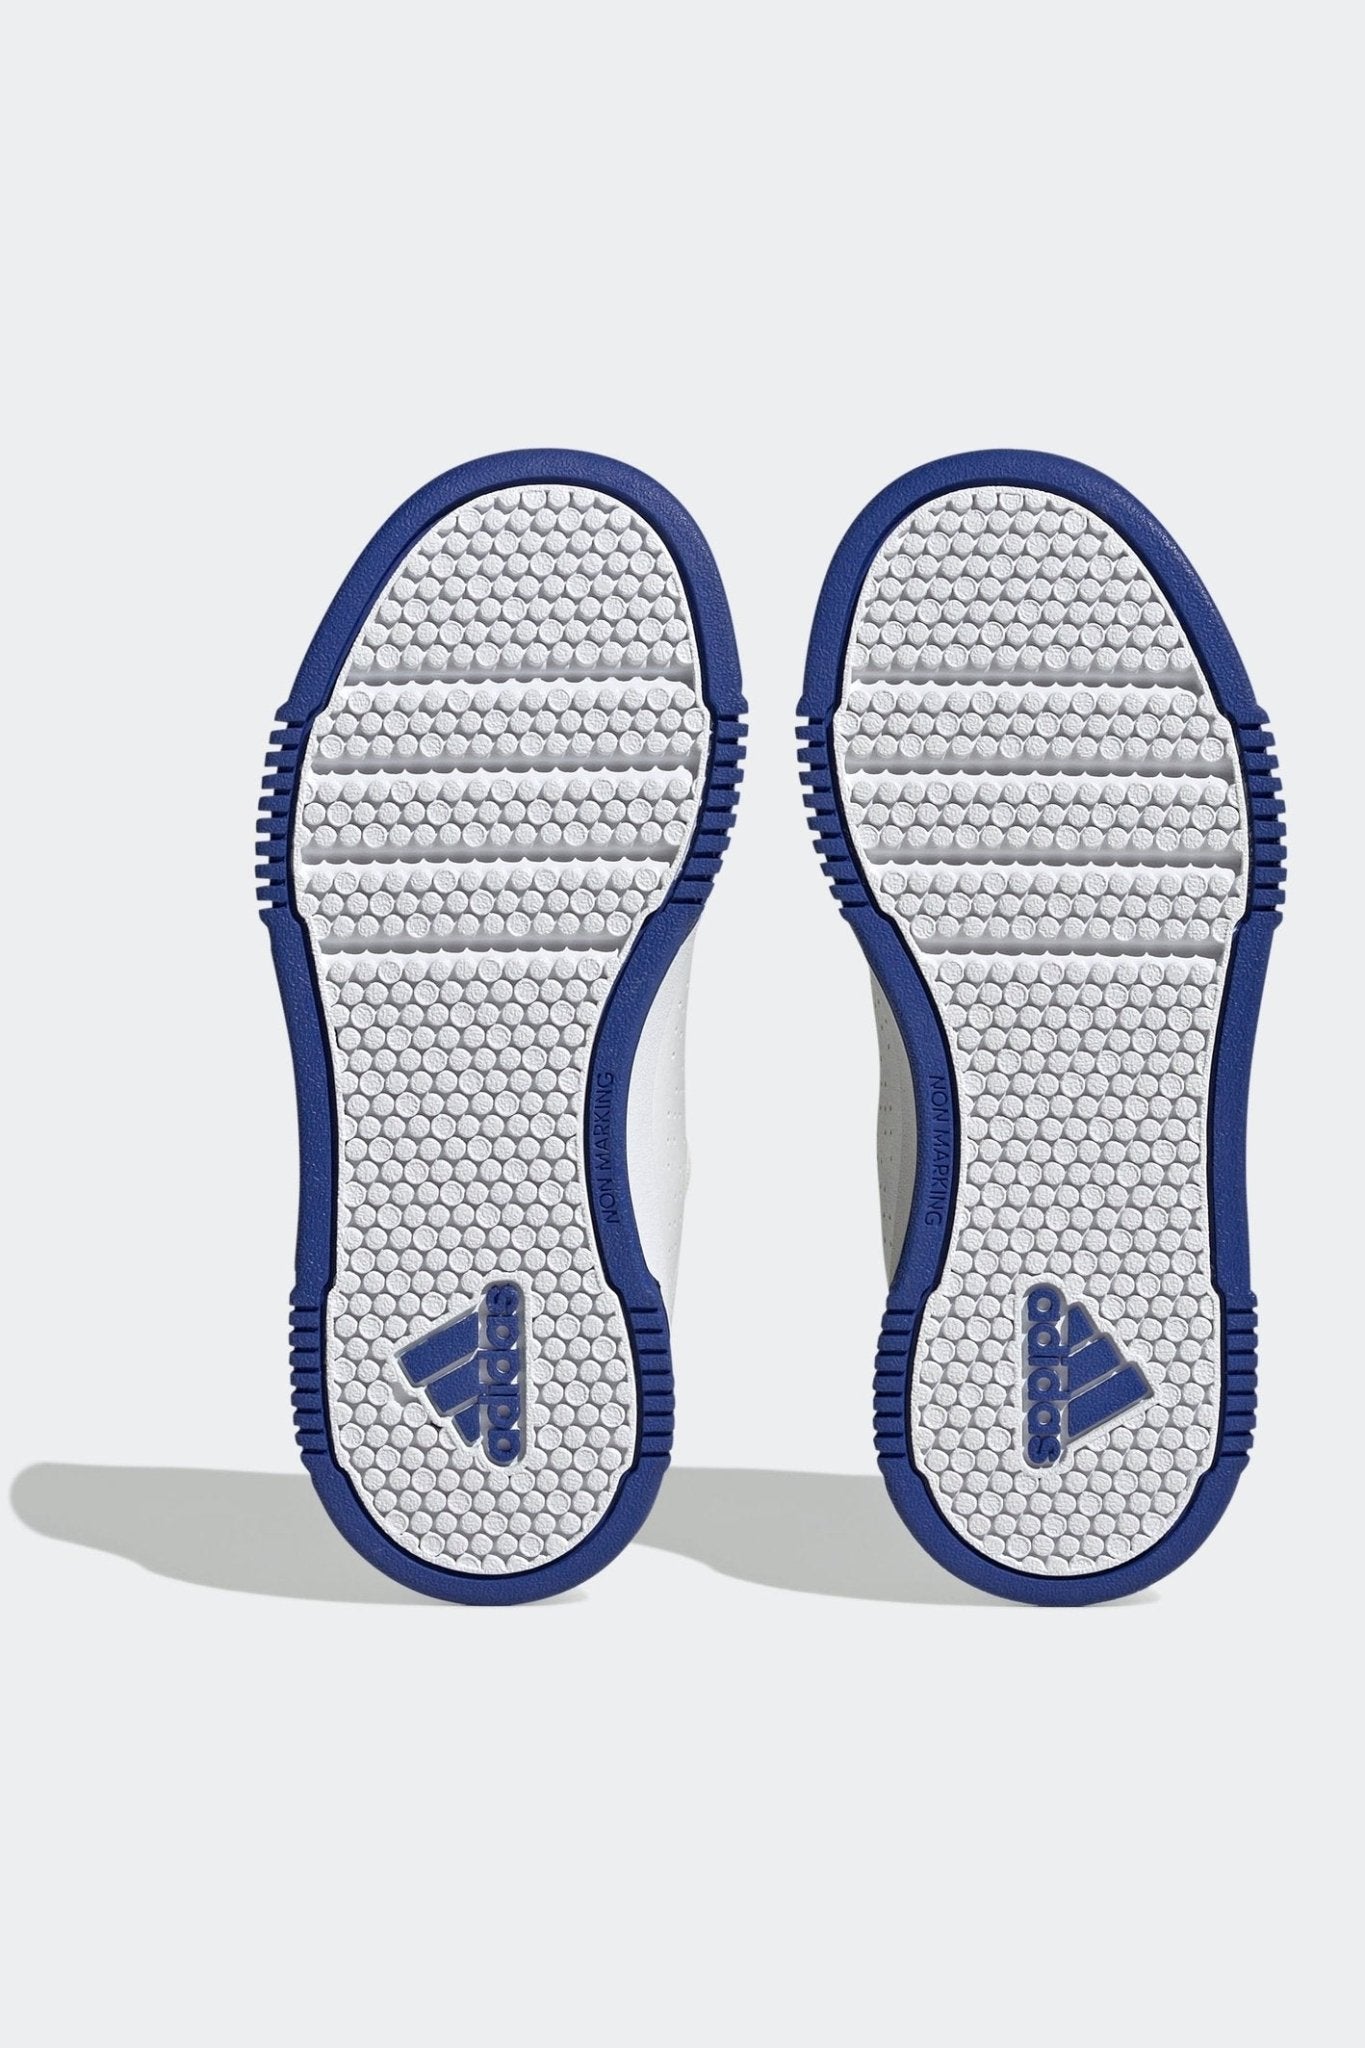 ADIDAS - נעלי ספורט לנוער Tensaur Sport 2.0 K בצבע לבן וכחול - MASHBIR//365